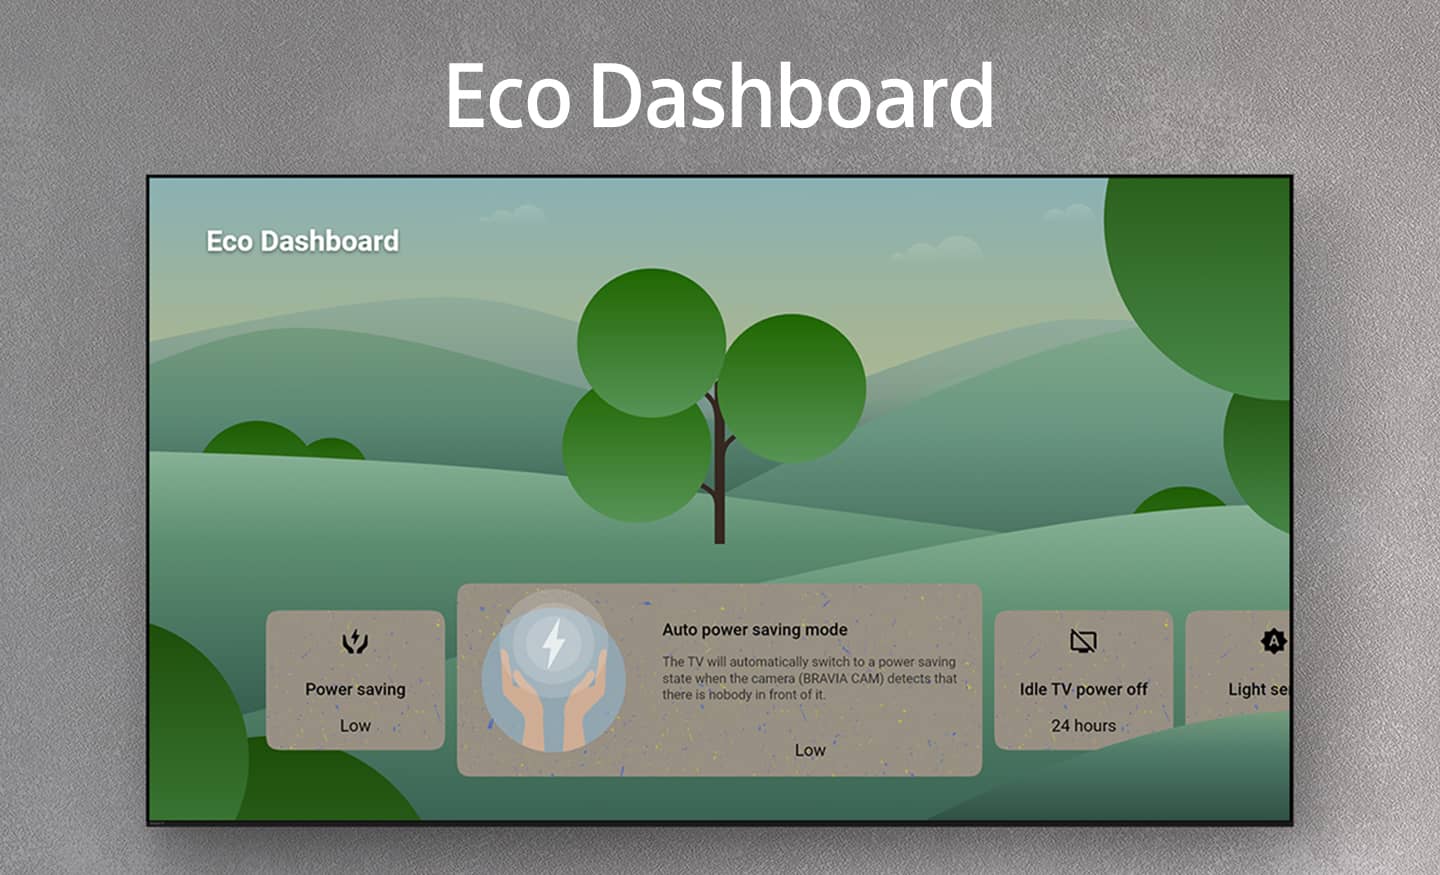 Eco Dashboard for environmentally friendly Sony TVs